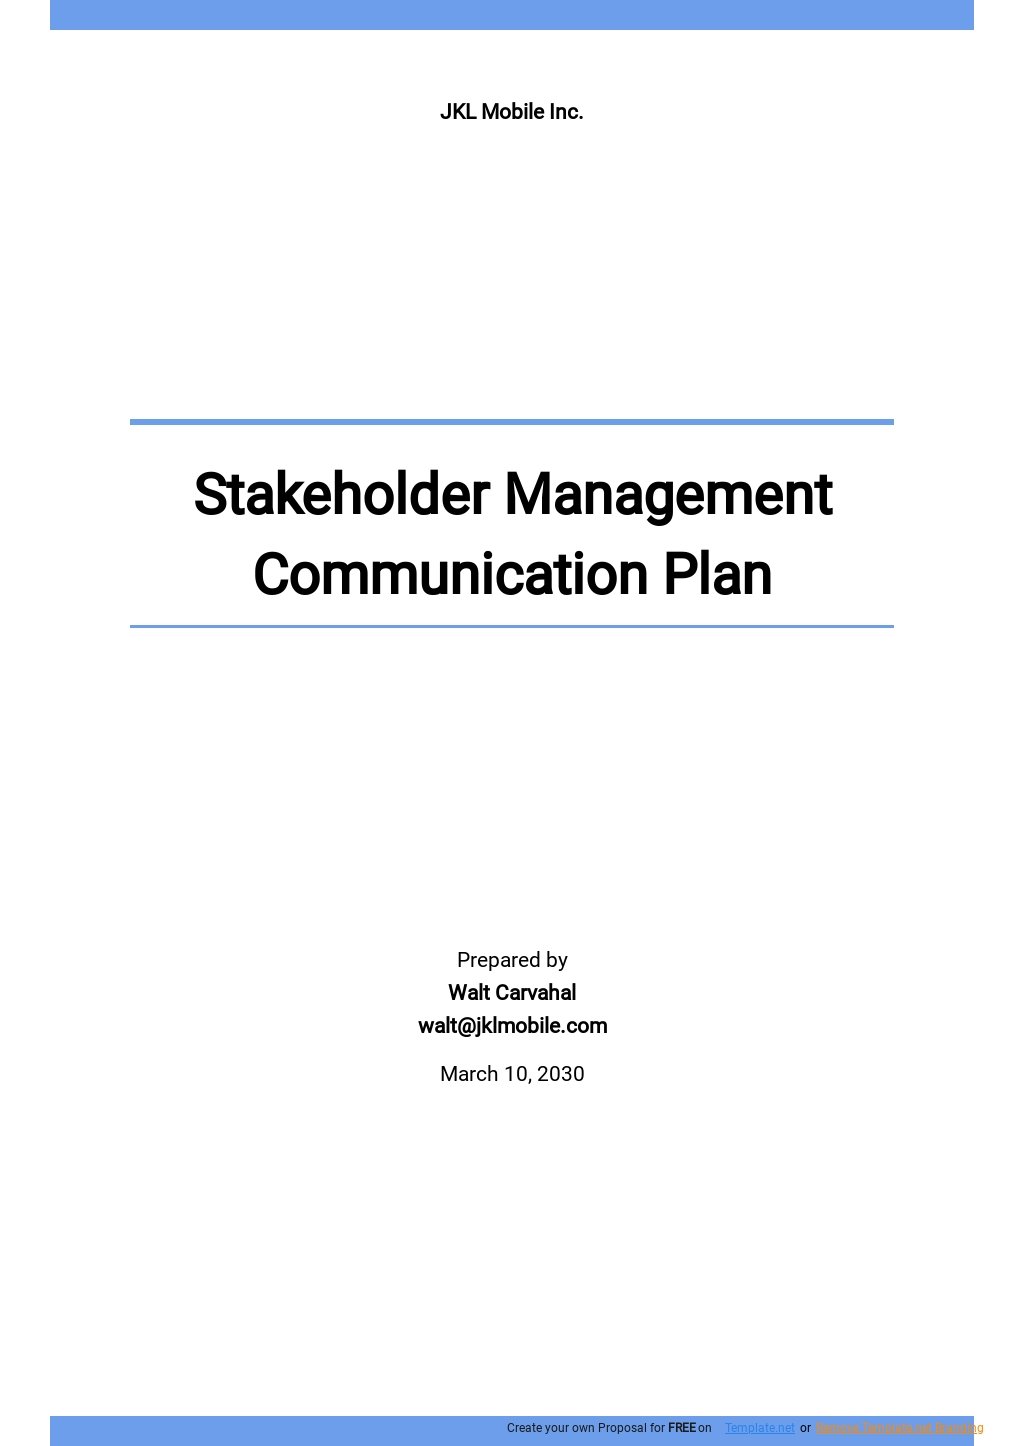 Stakeholder Management Communication Plan Template